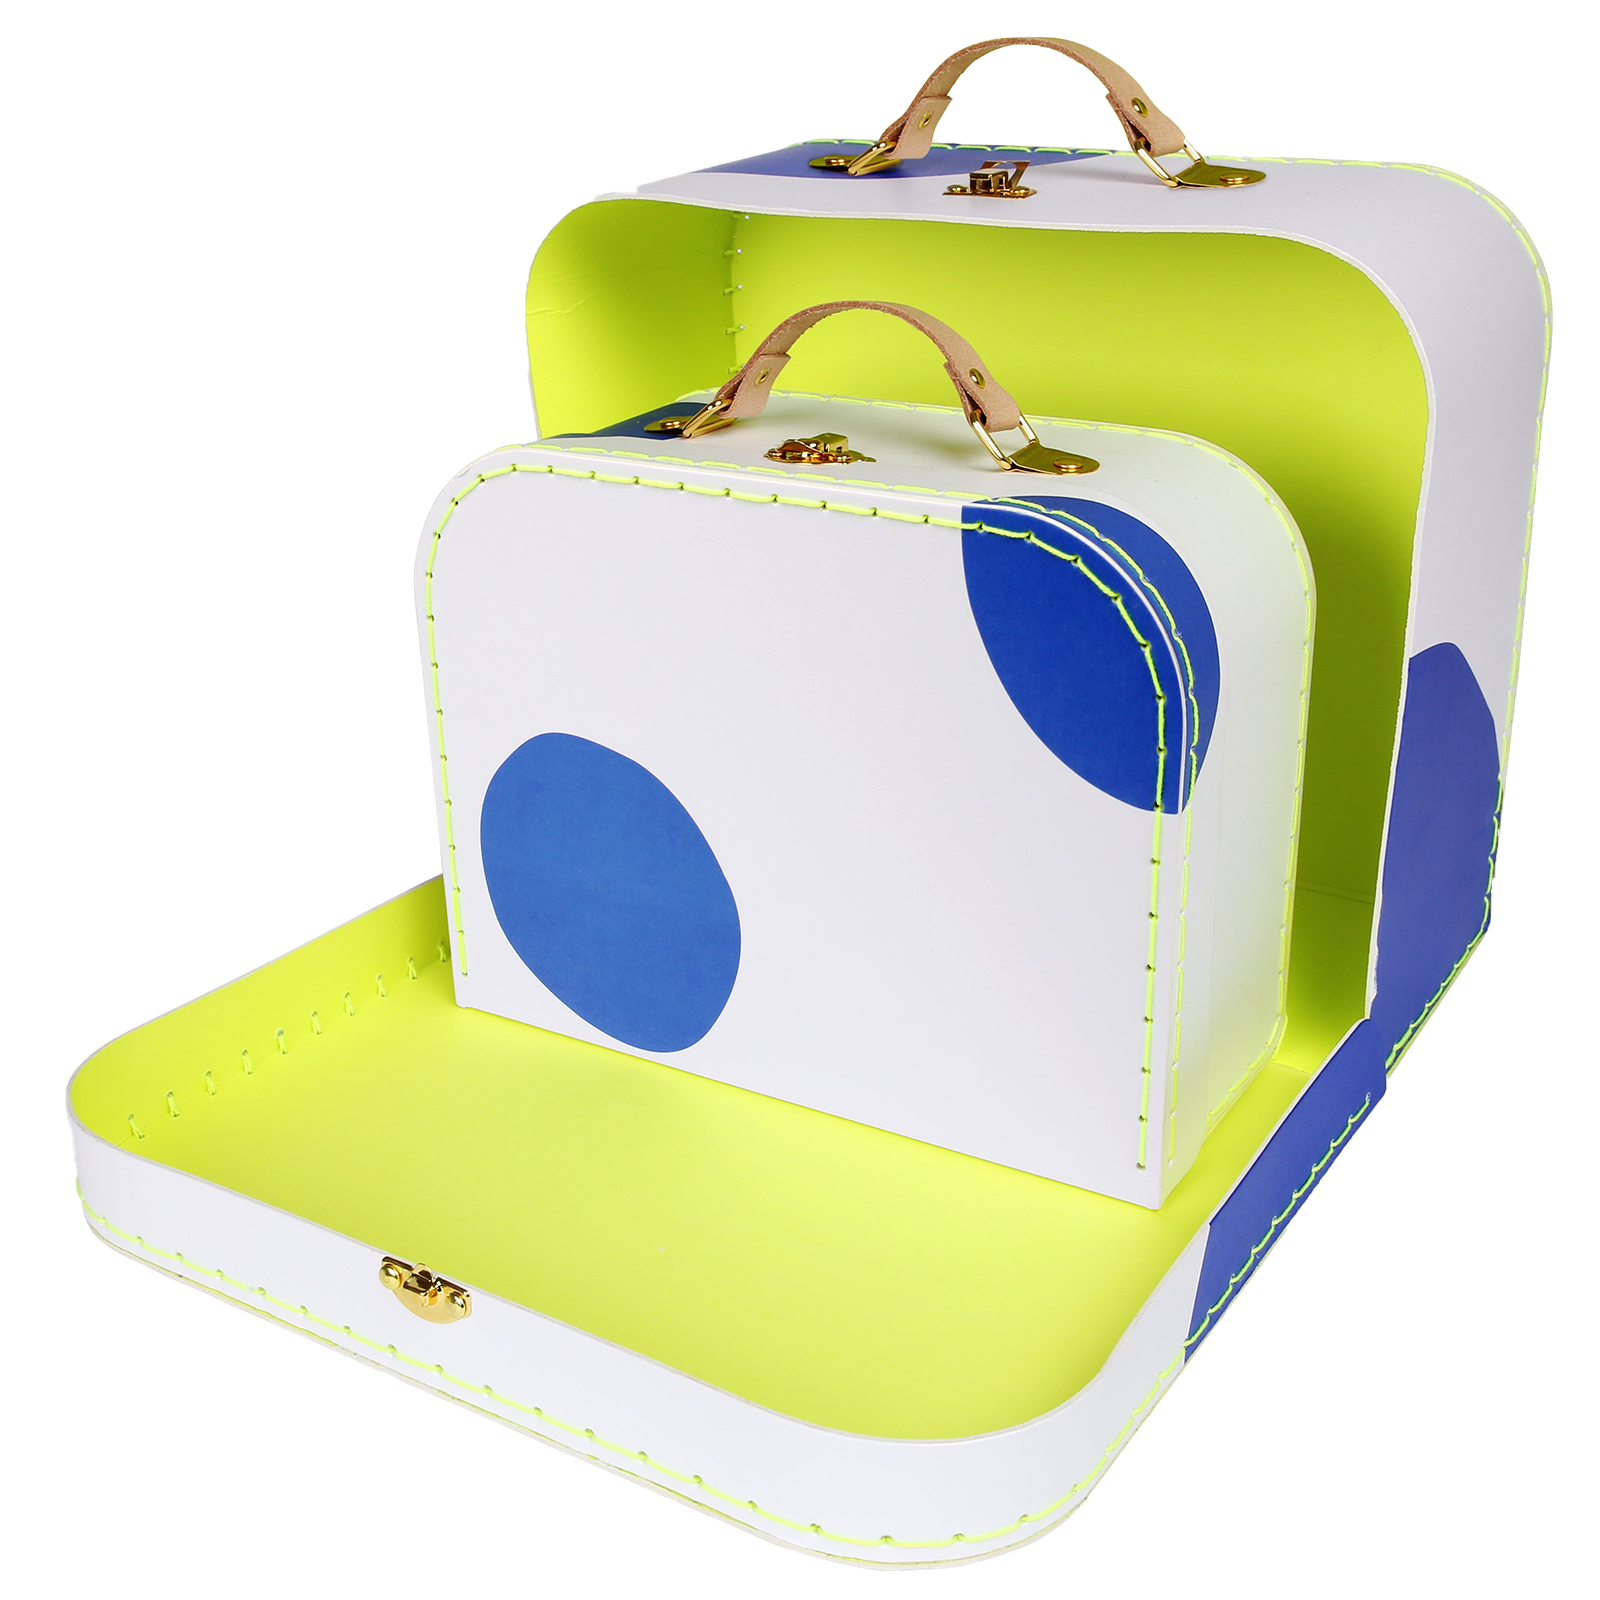 Polka Dot Suitcase